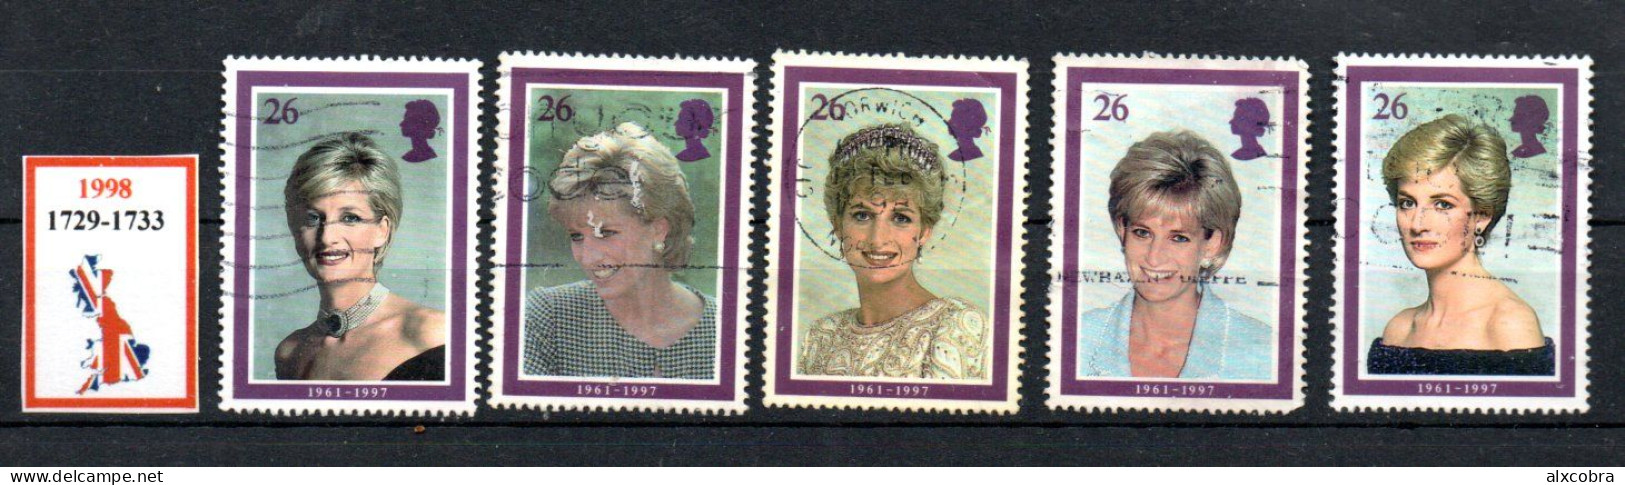 United Kingdom Lady Diana 1998 Michel 1729-1733 USED - Oblitérés